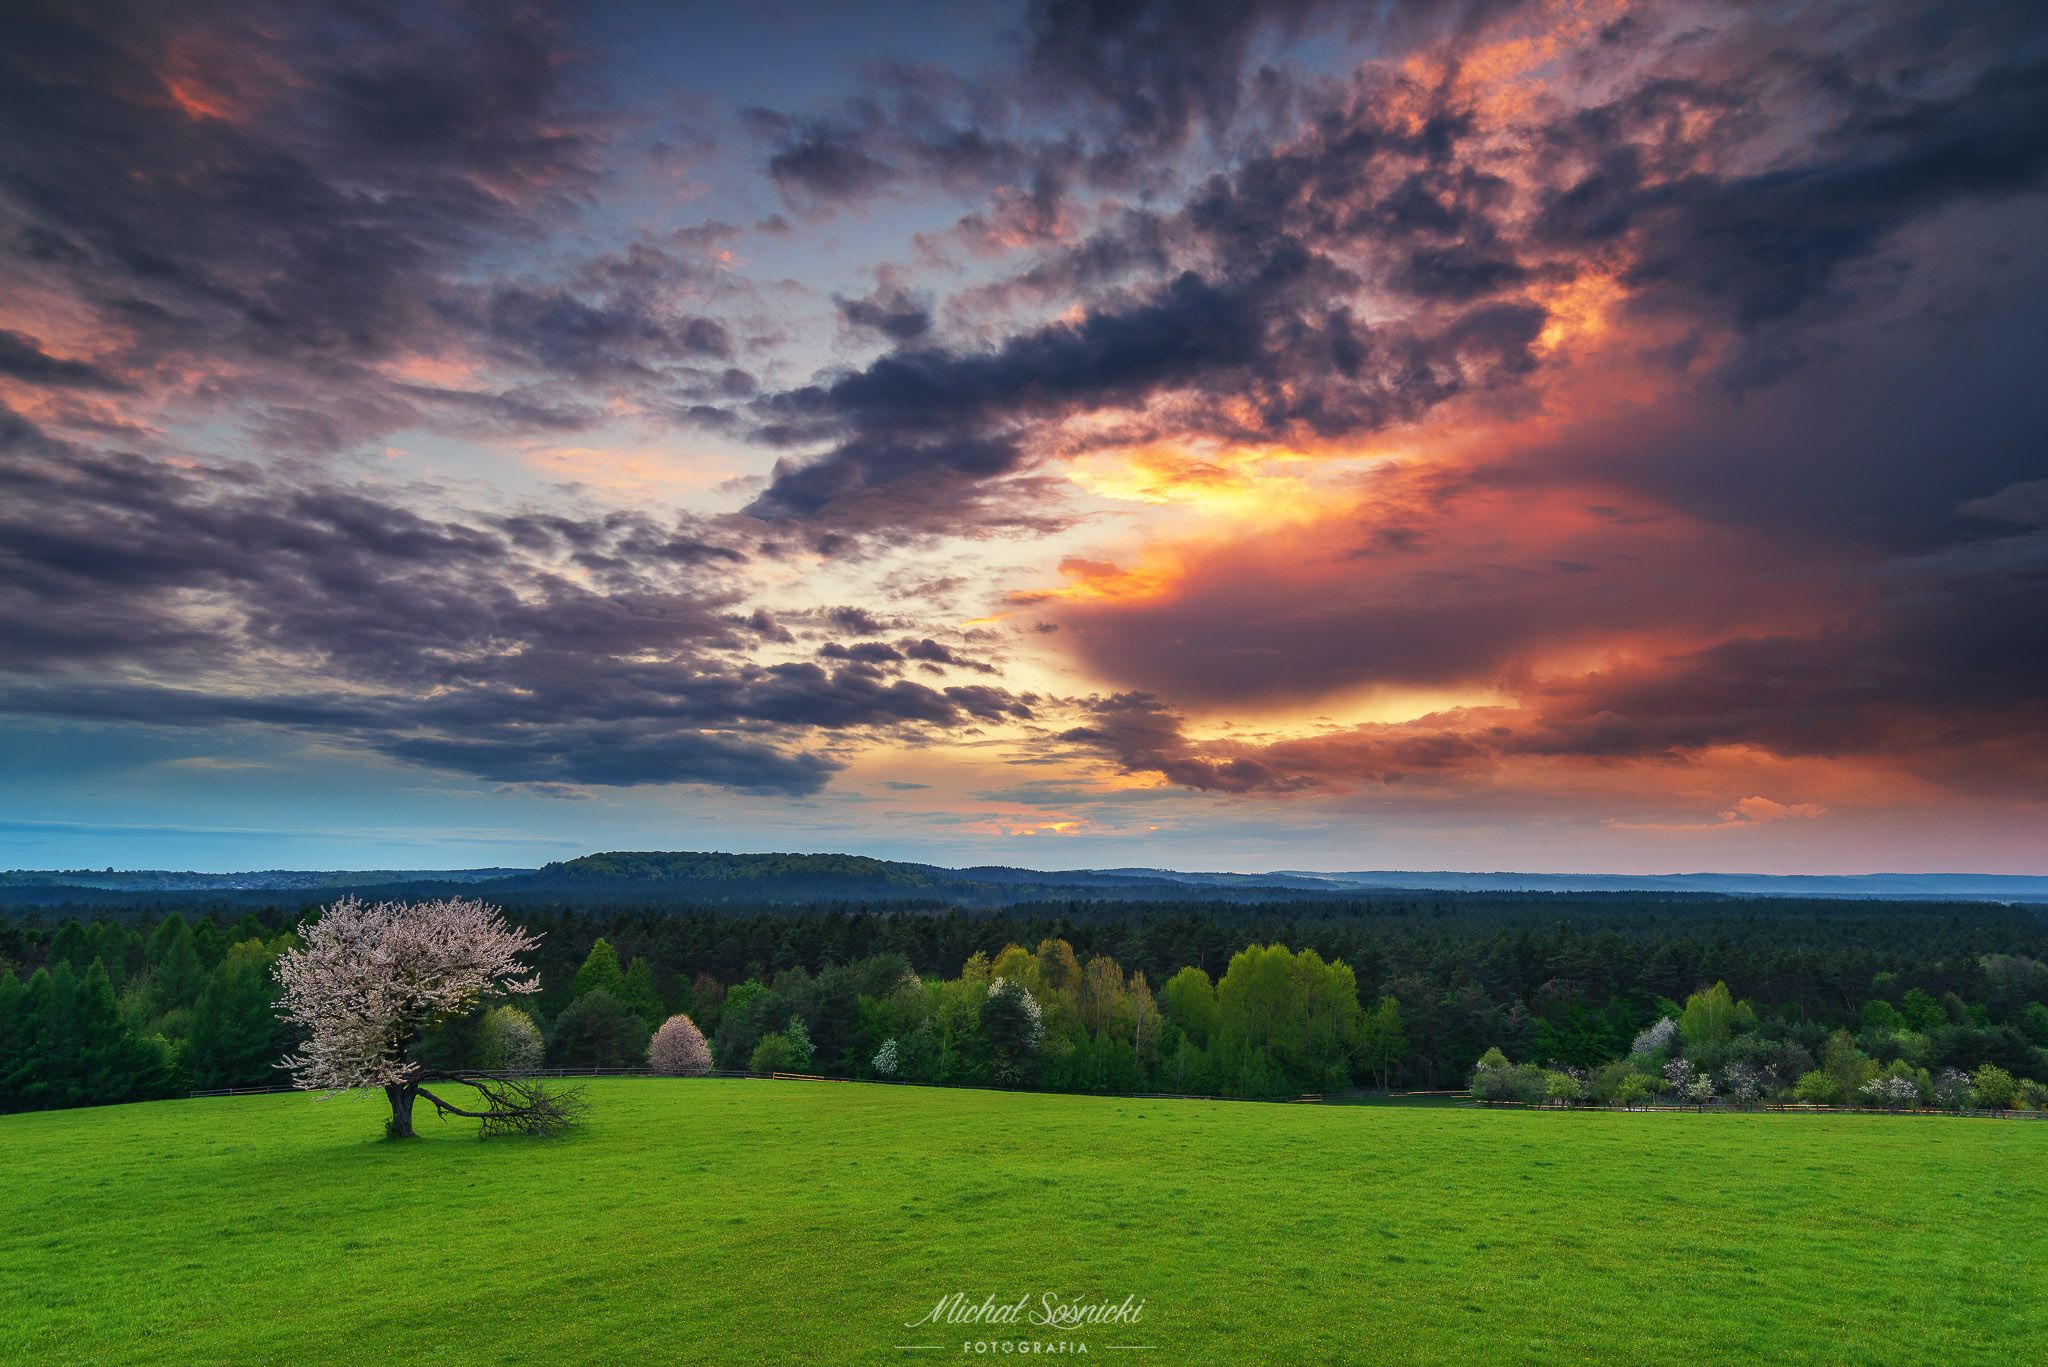 #magic #poland #pentax #benro #landscape #sky #nature #sunset #sunrise #spring #tree, Michał Sośnicki